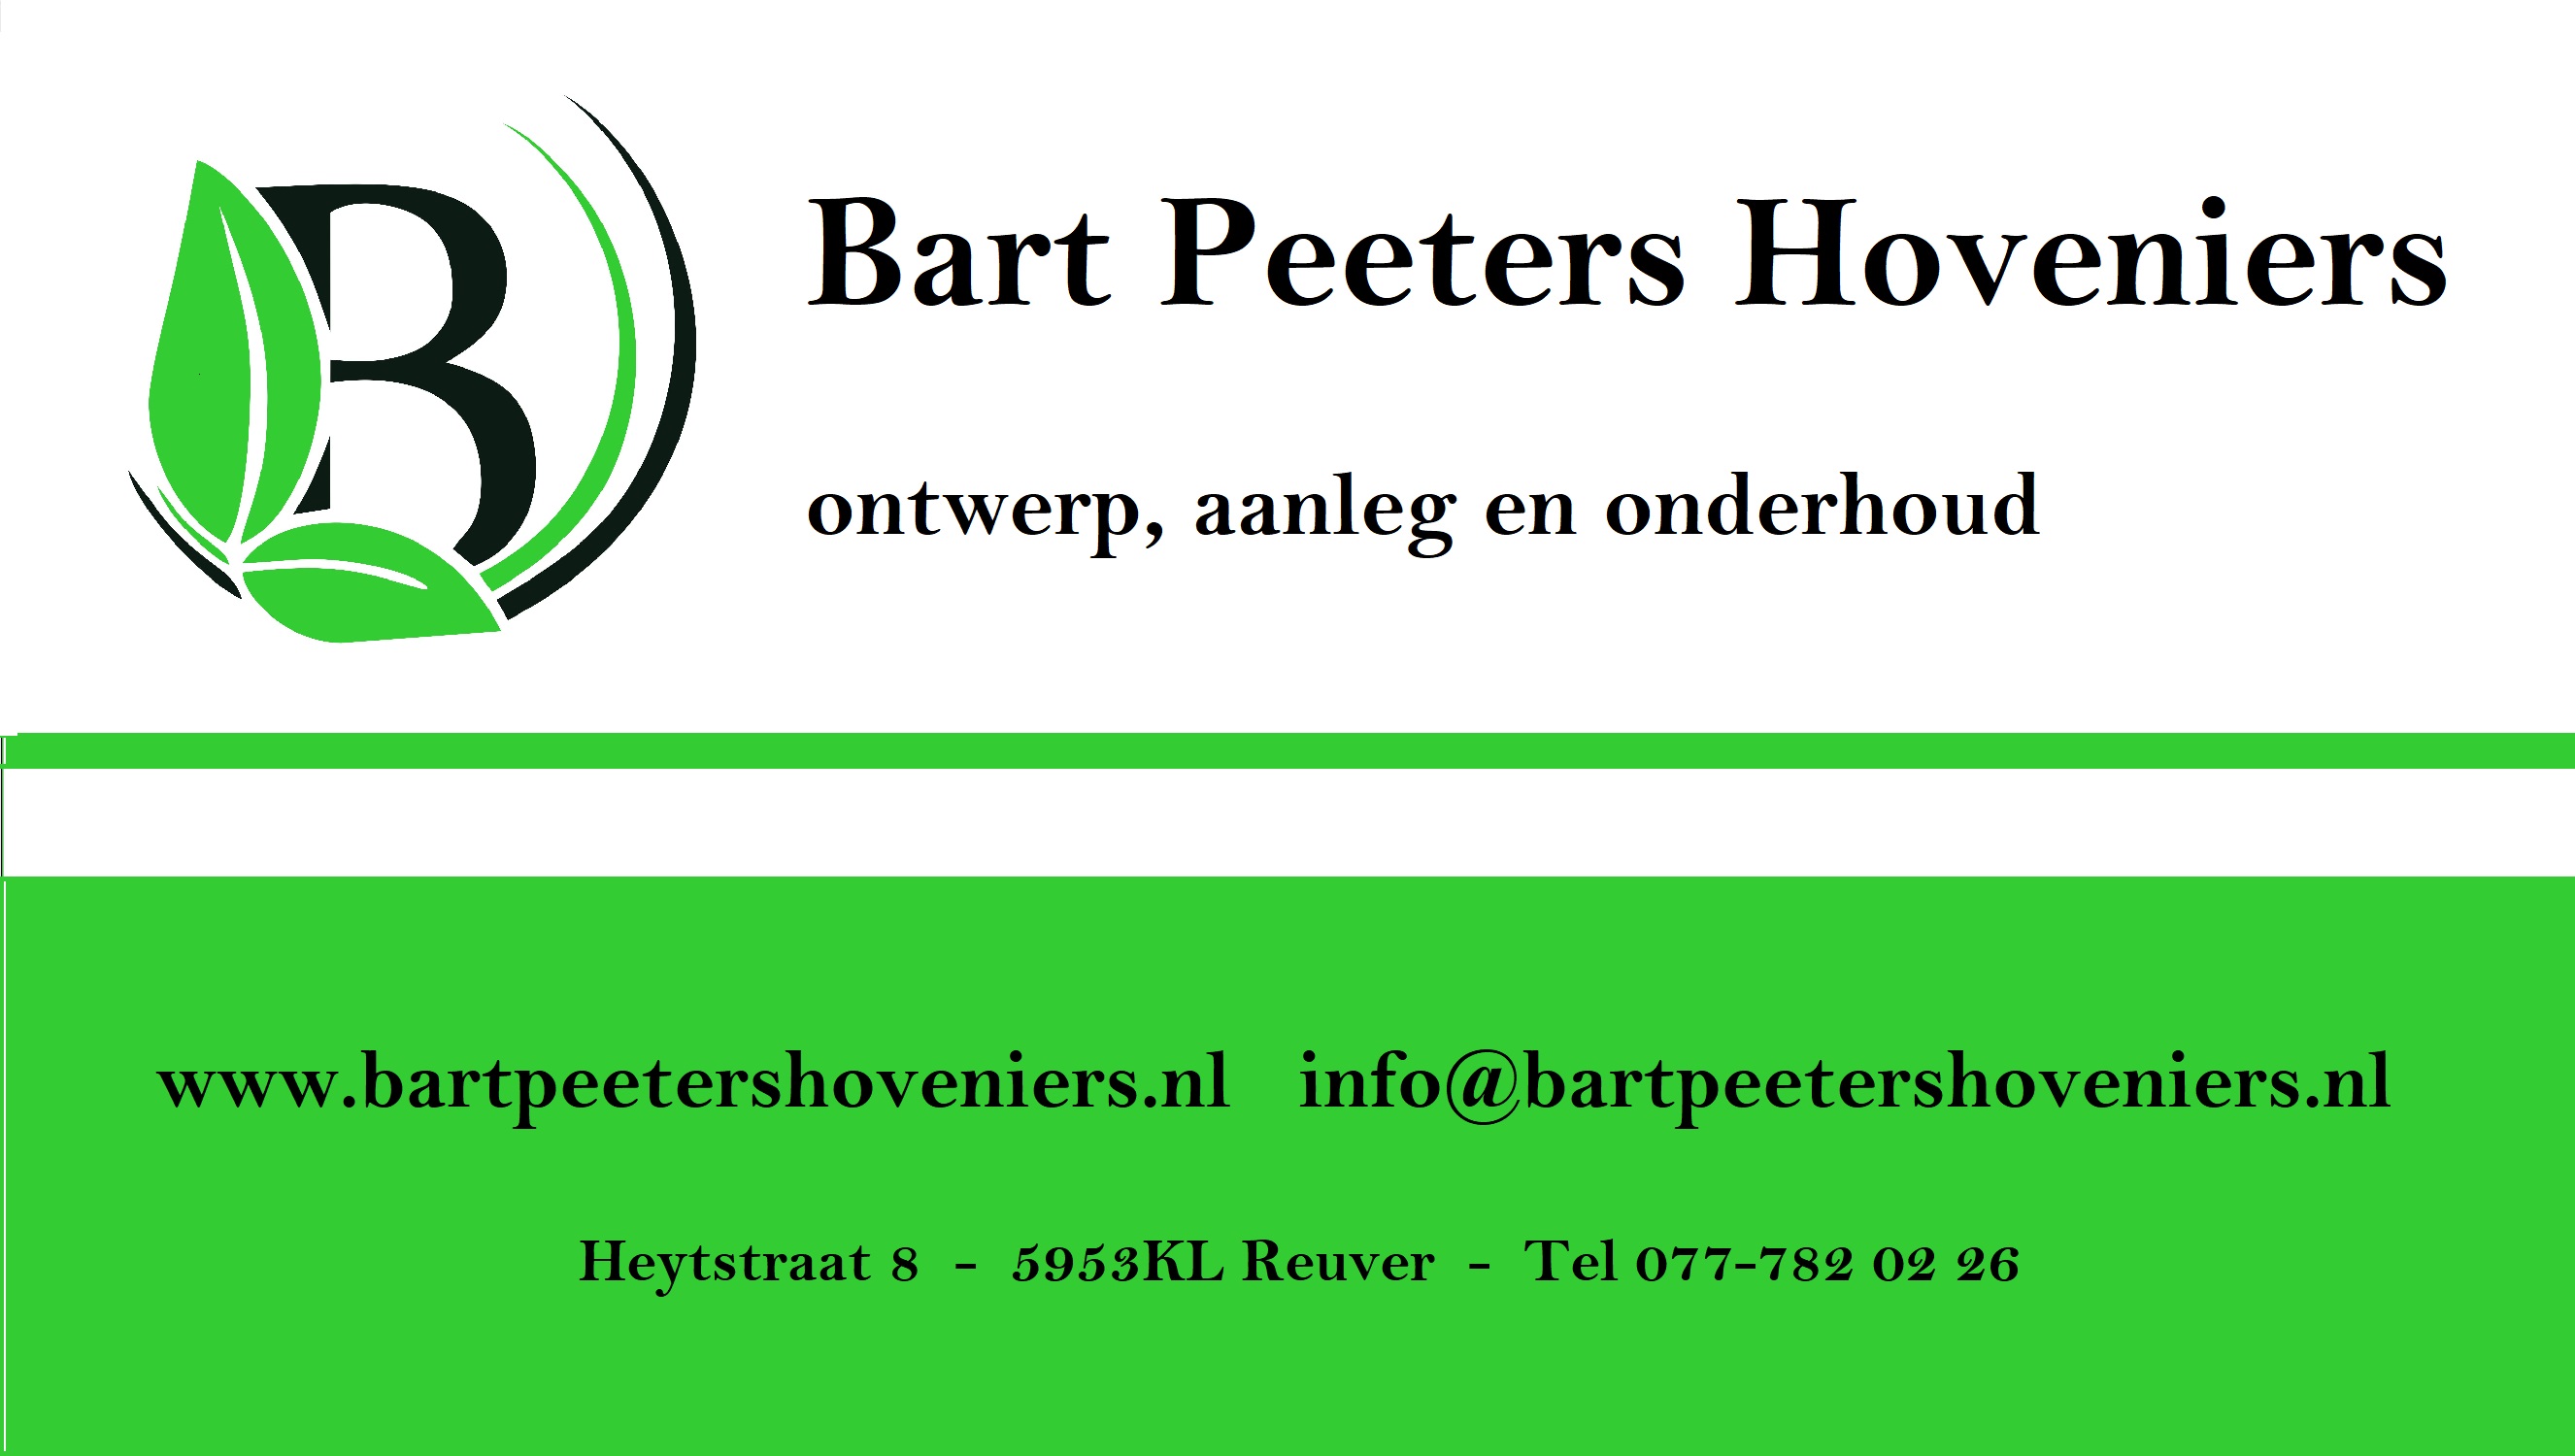 Bart Peeters Hoveniers